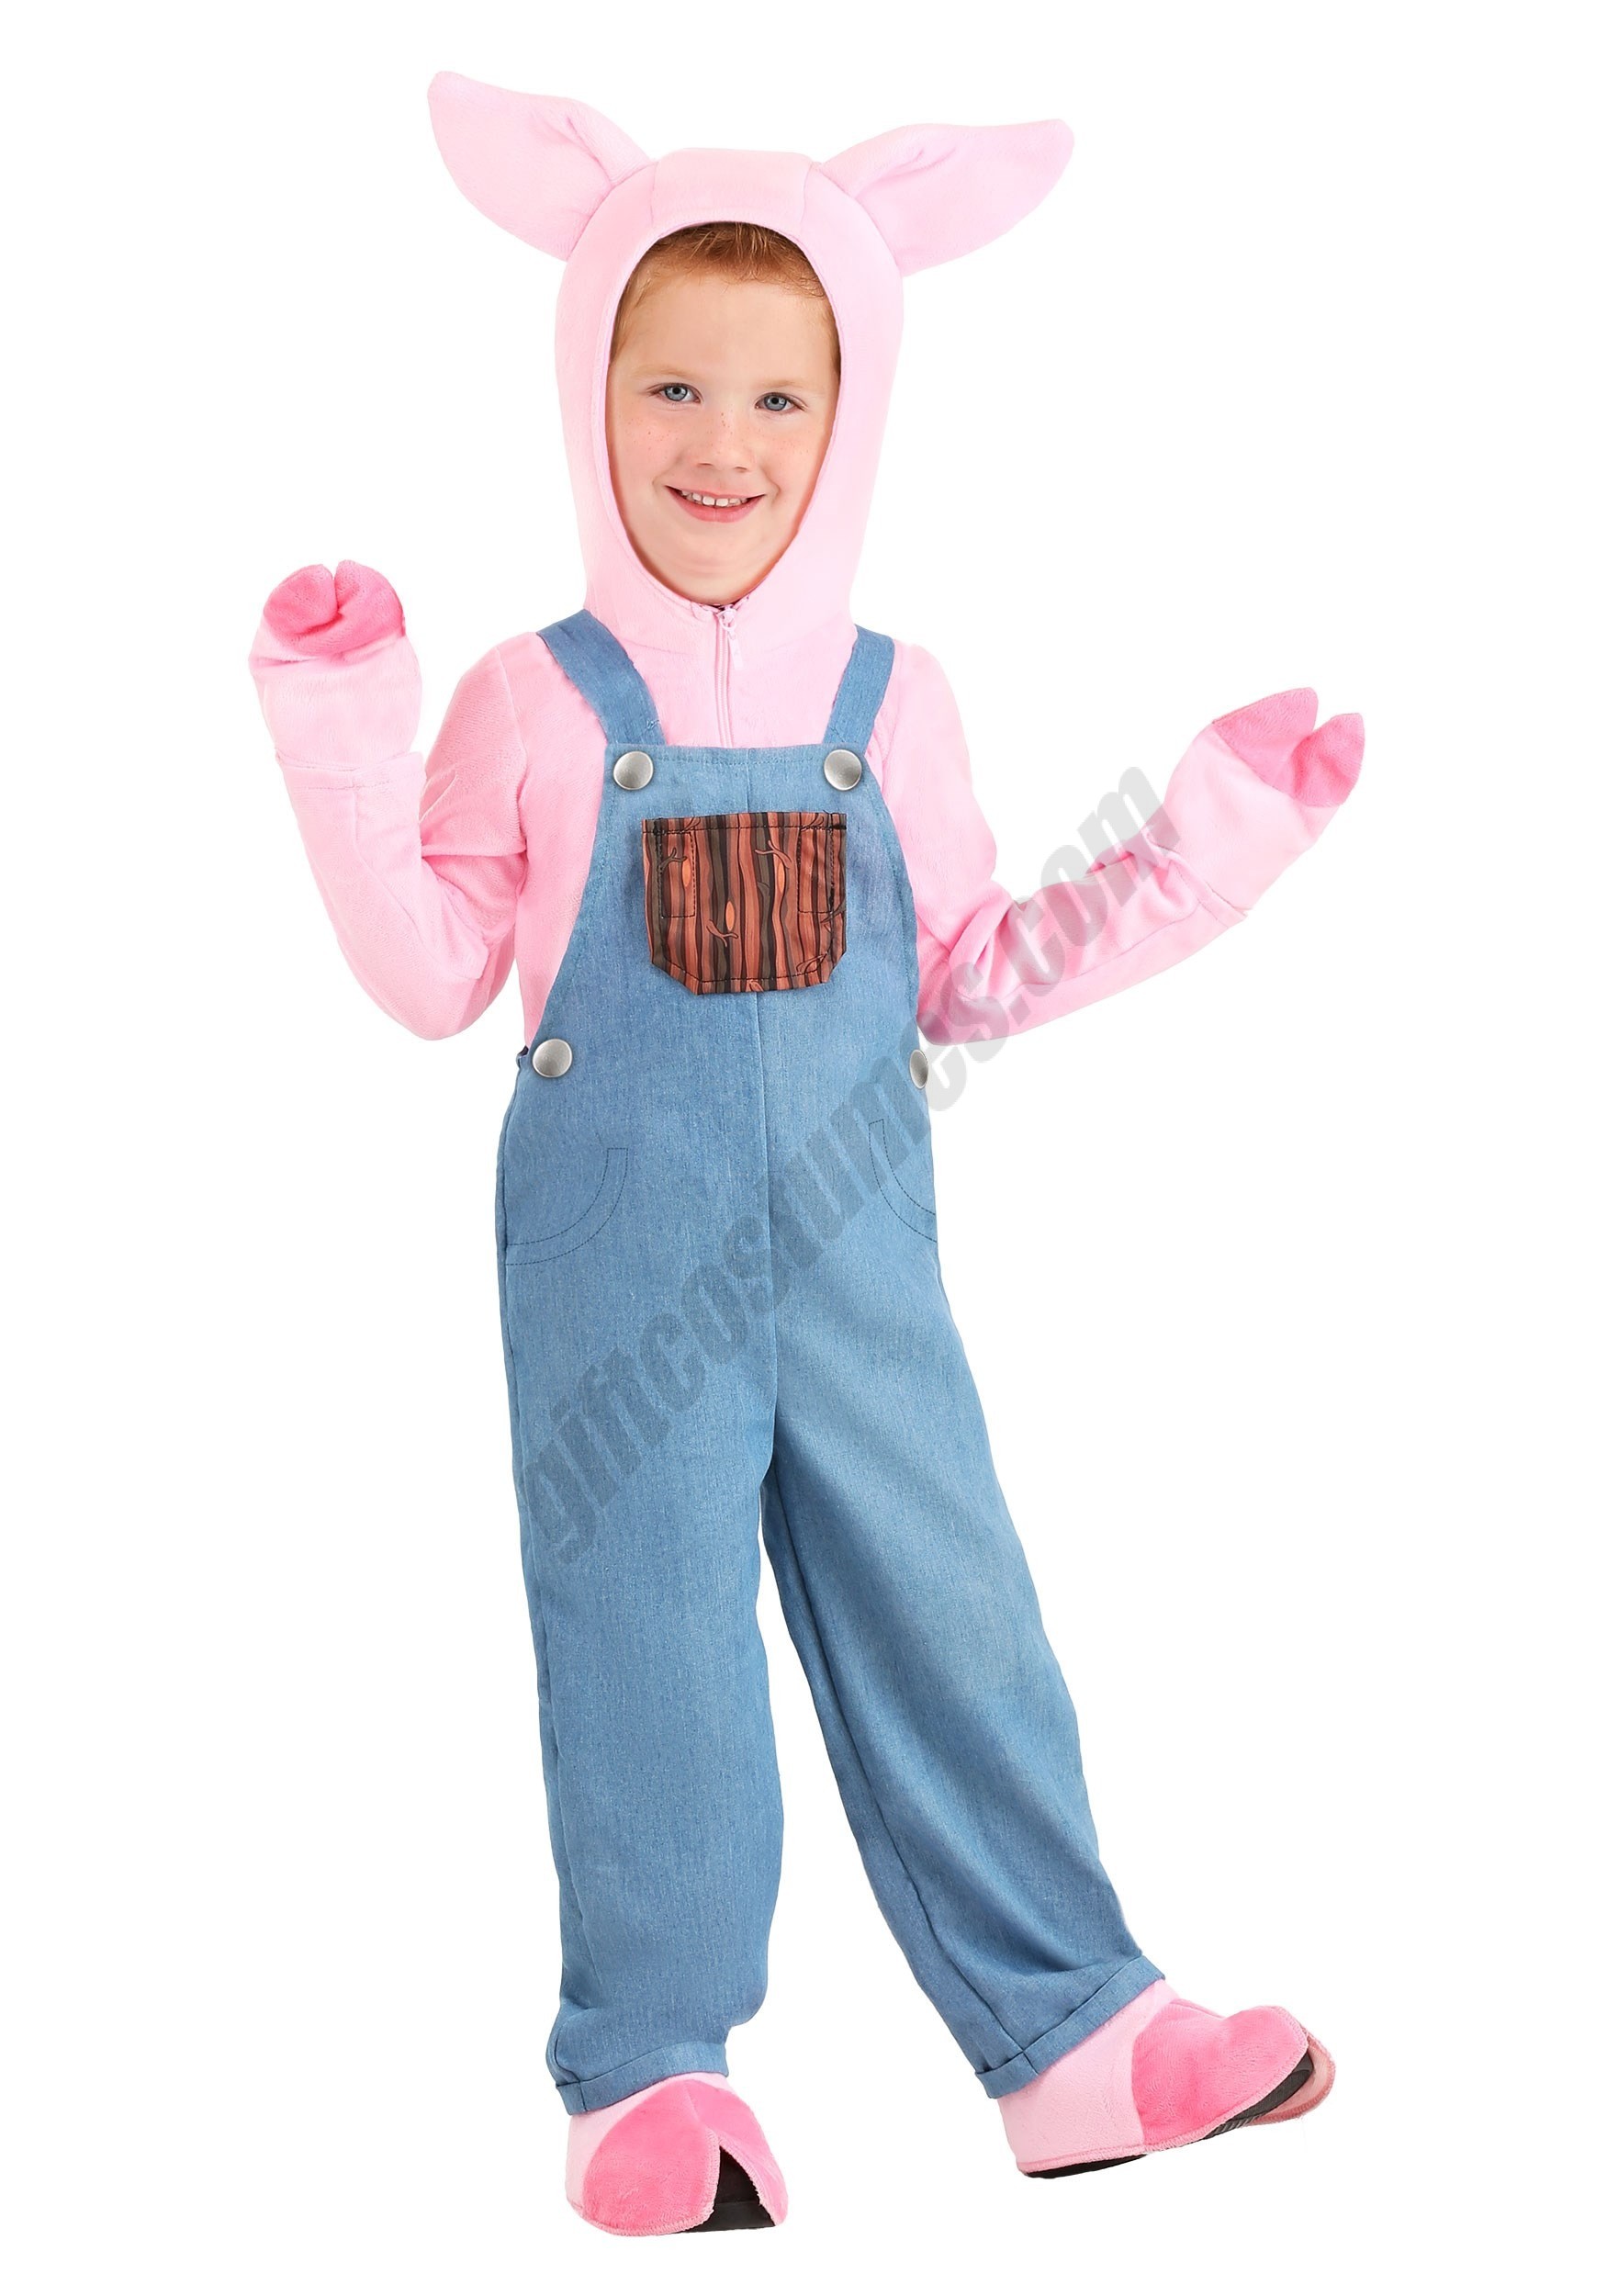 Little Piggy Toddler Costume Promotions - Little Piggy Toddler Costume Promotions